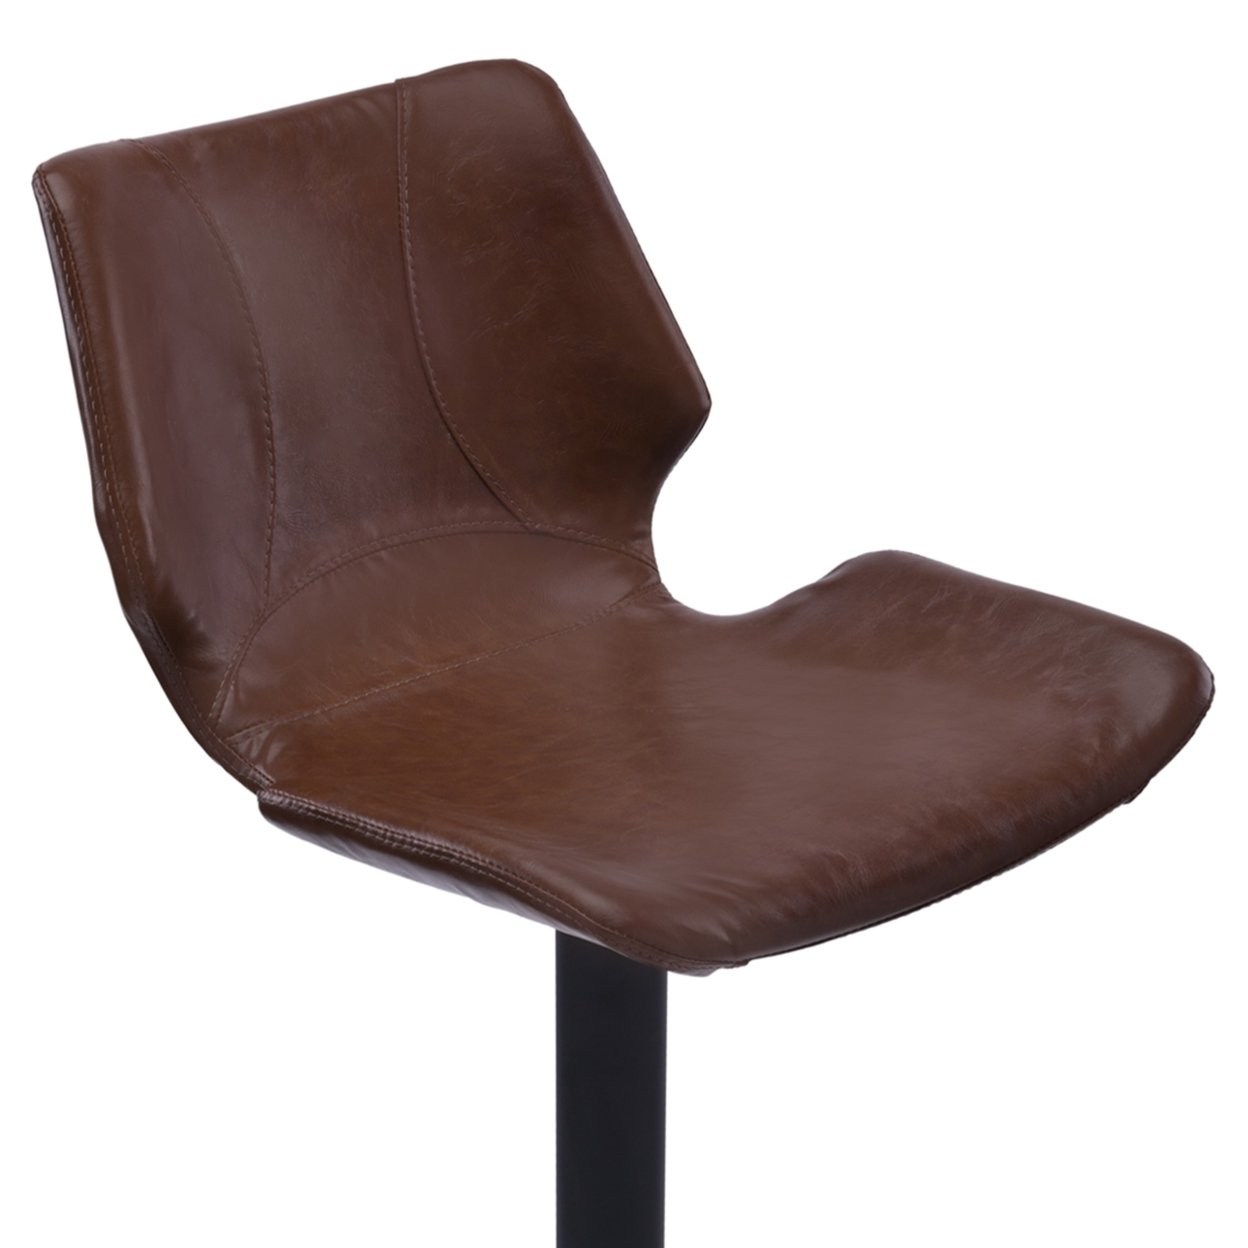 Leatherette Counter Barstool With Adjustable Metal Tubular Support, Brown- Saltoro Sherpi